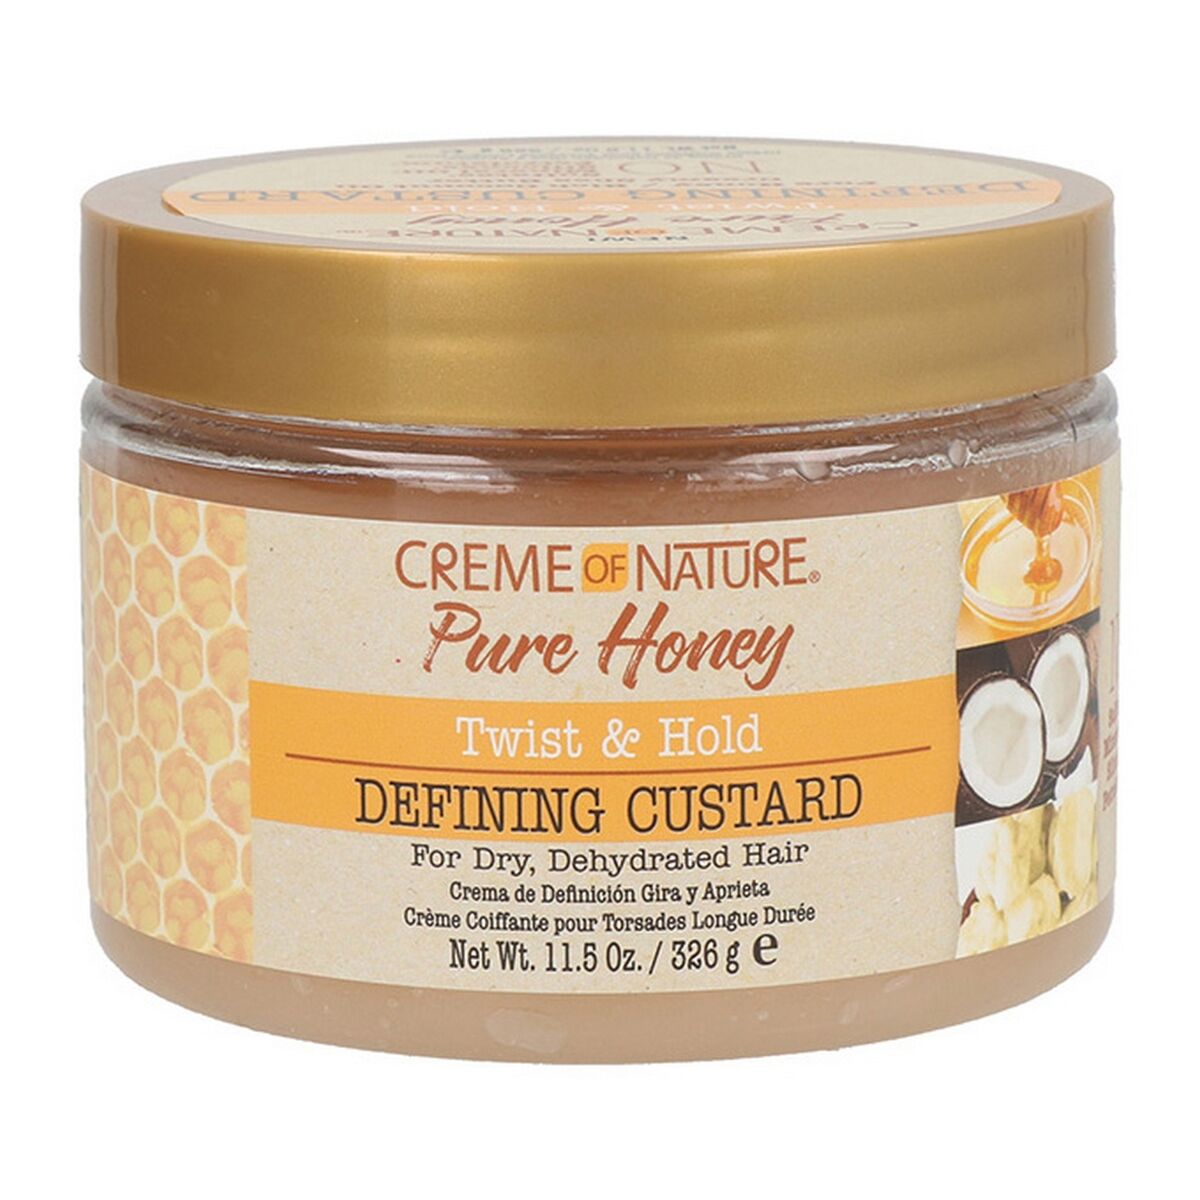 Conditioner Creme of Nature Ure Honey Twisted & Hold καθοριστική κρέμα (326 g)